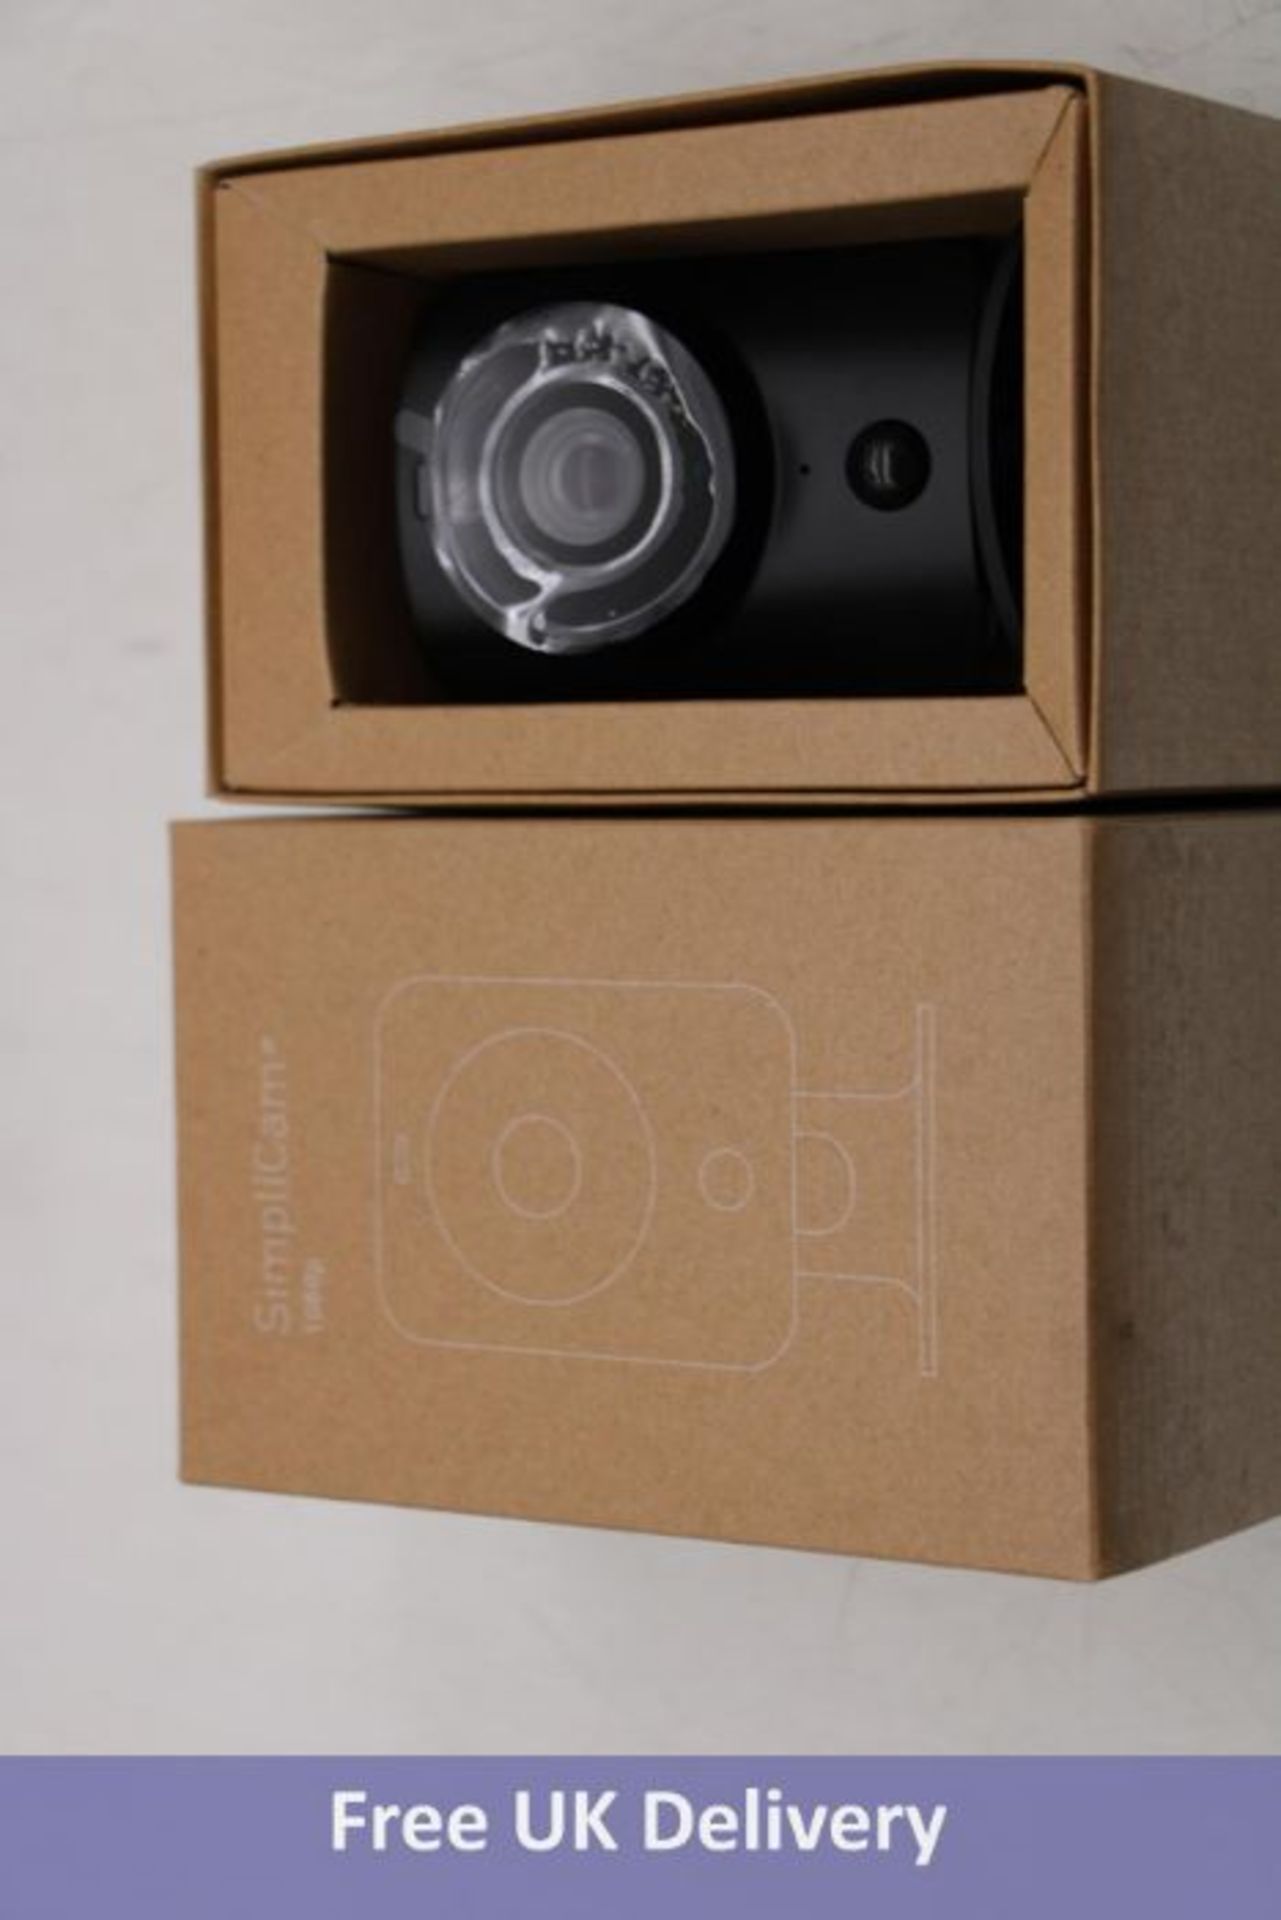 SimpliSafe Simplicam 1080p Indoor Security Camera